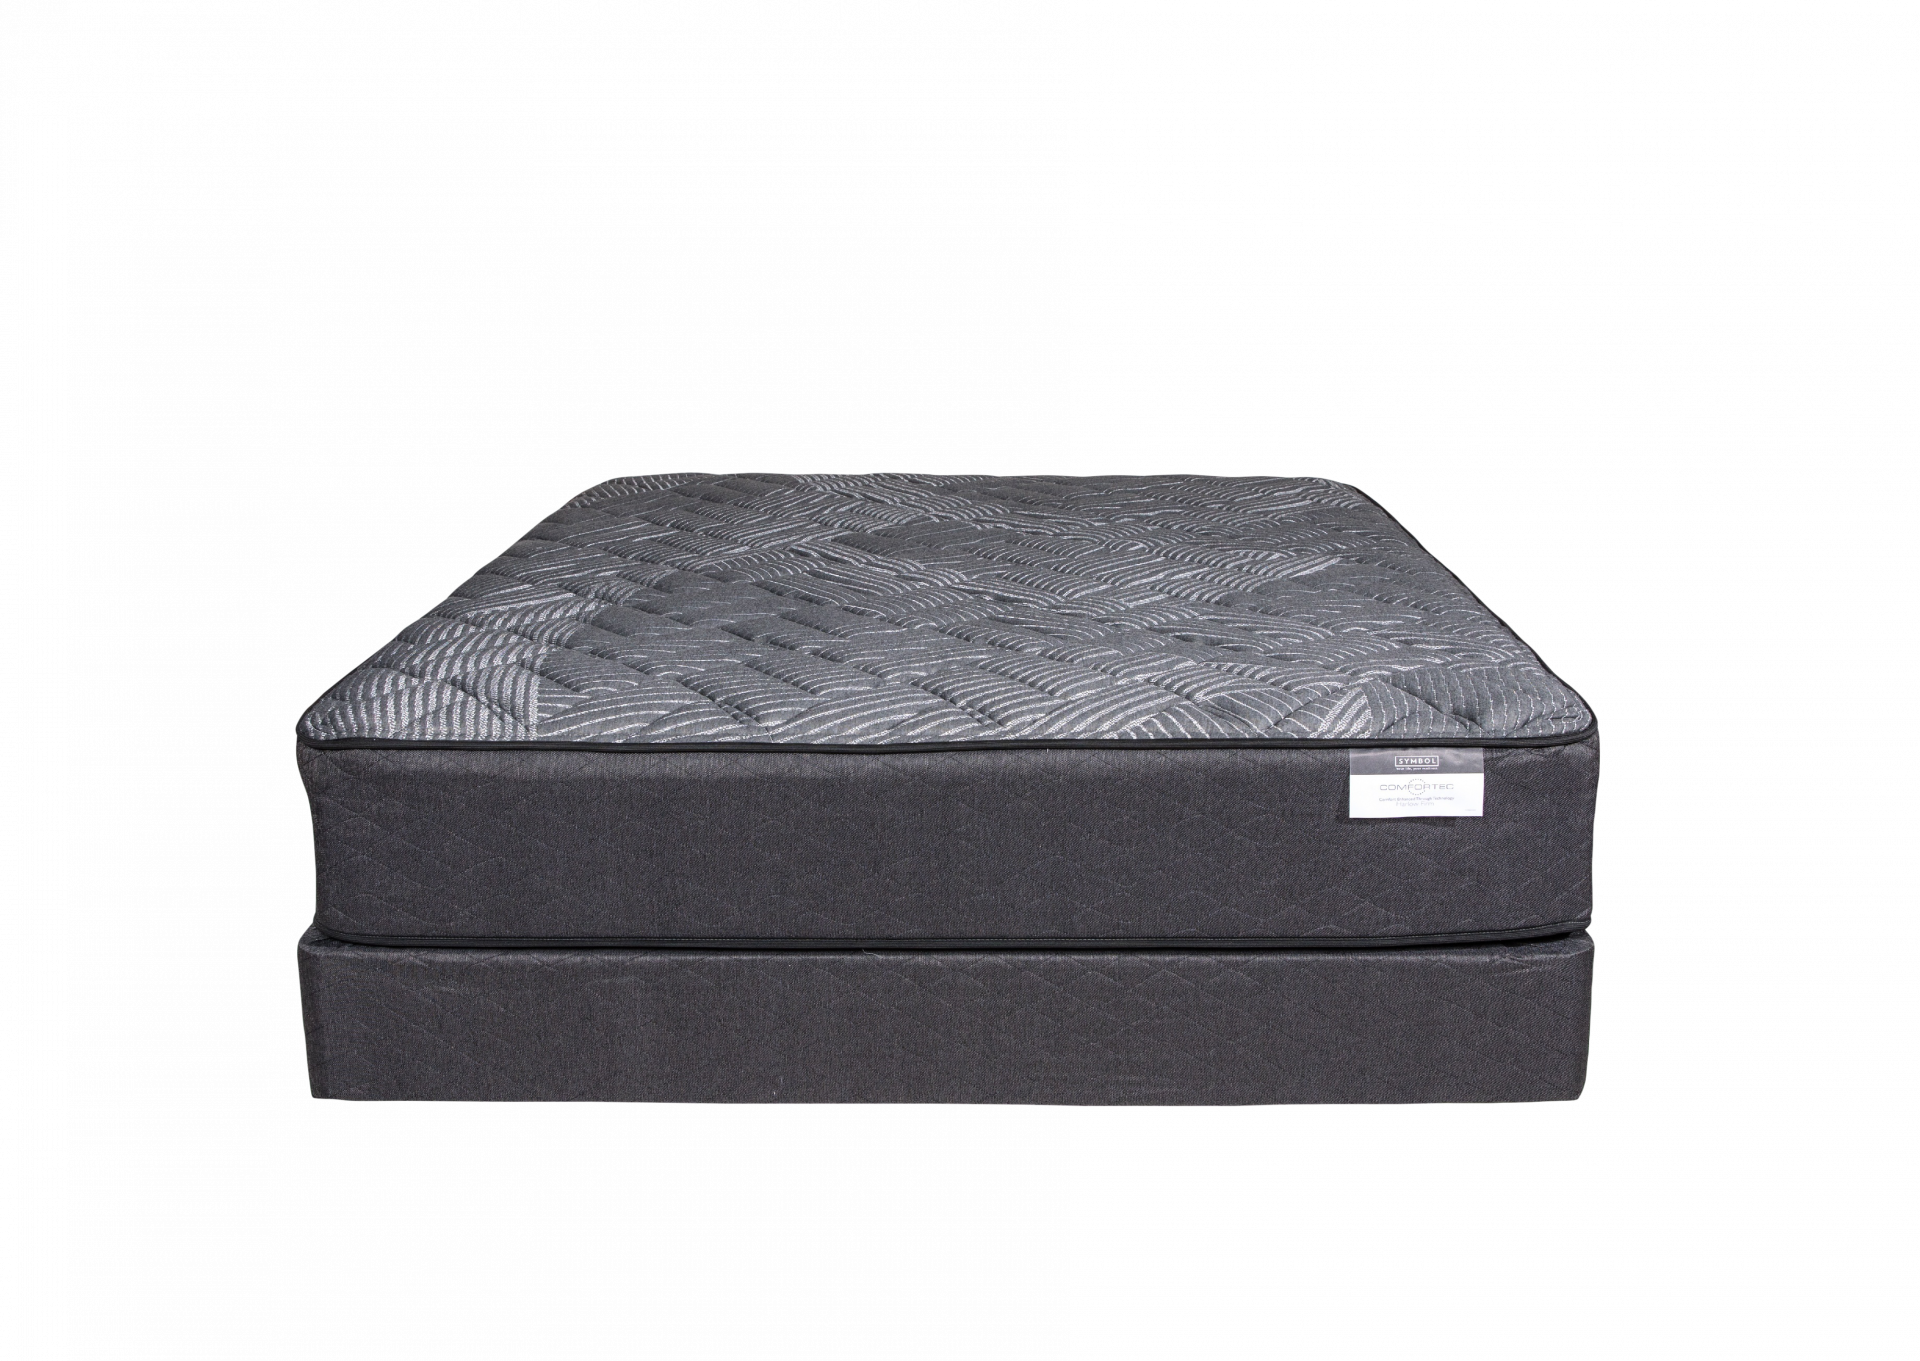 Harlow Firm Queen size mattress set by Symbol Mattress,Symbol Mattress